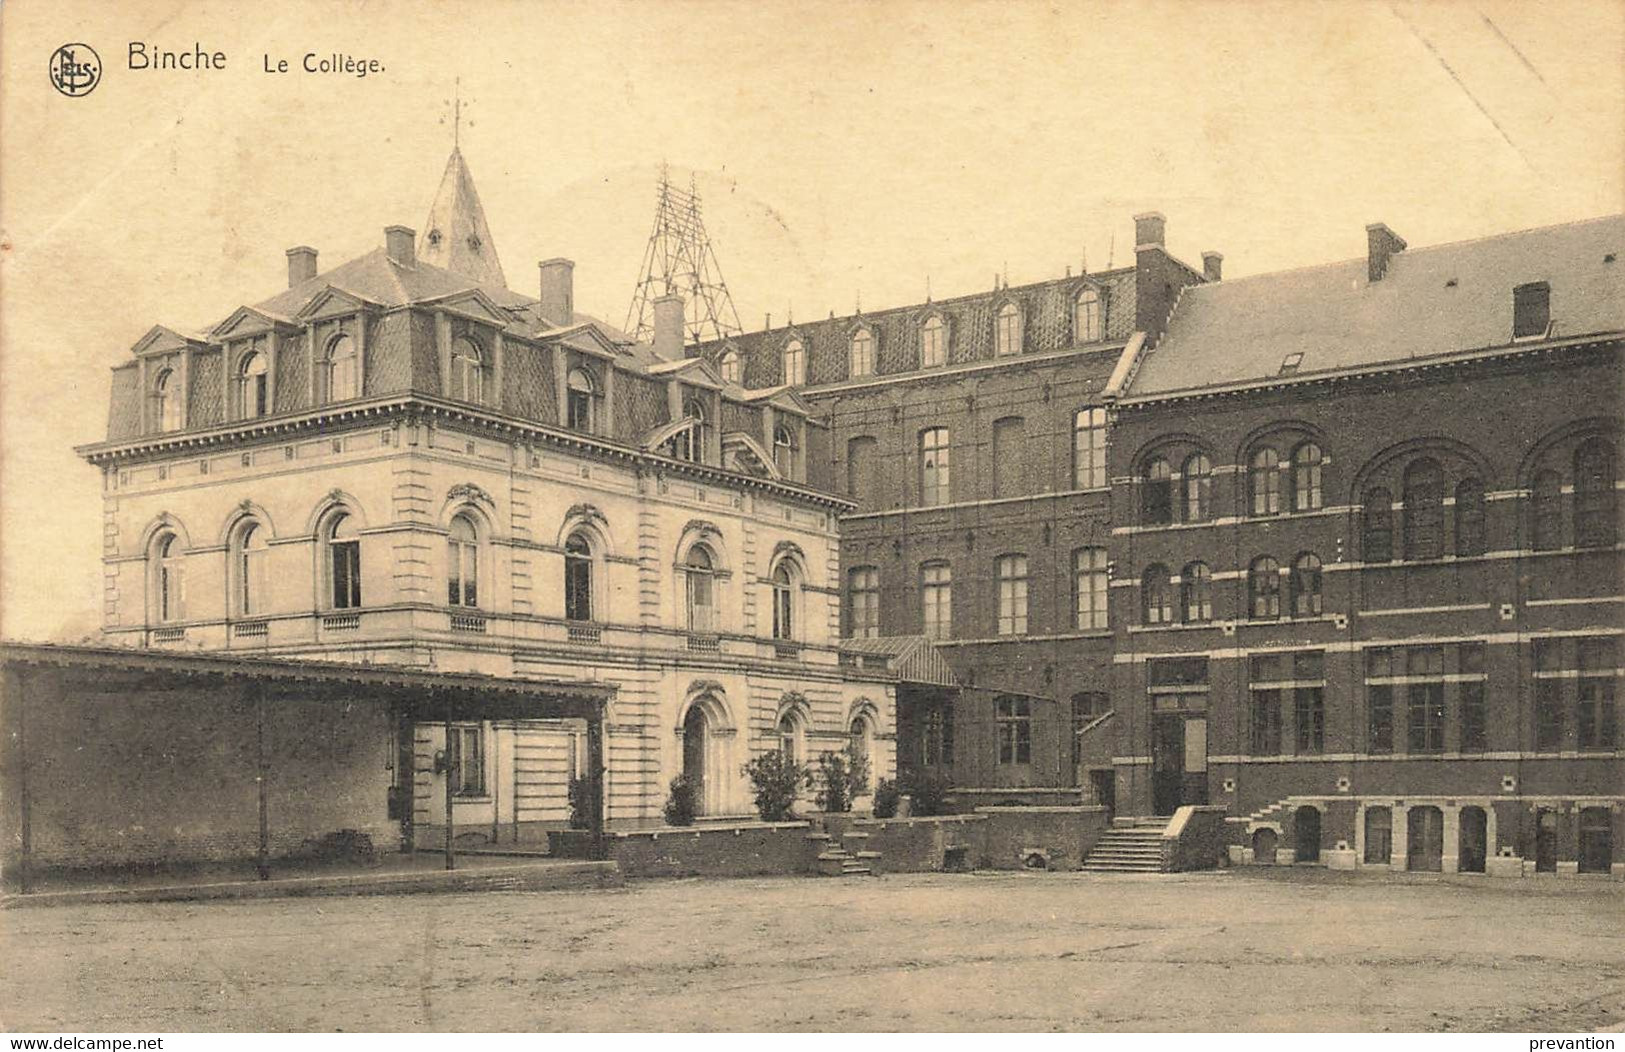 BINCHE - Le Collège - Carte Circulé En 1921 - Binche